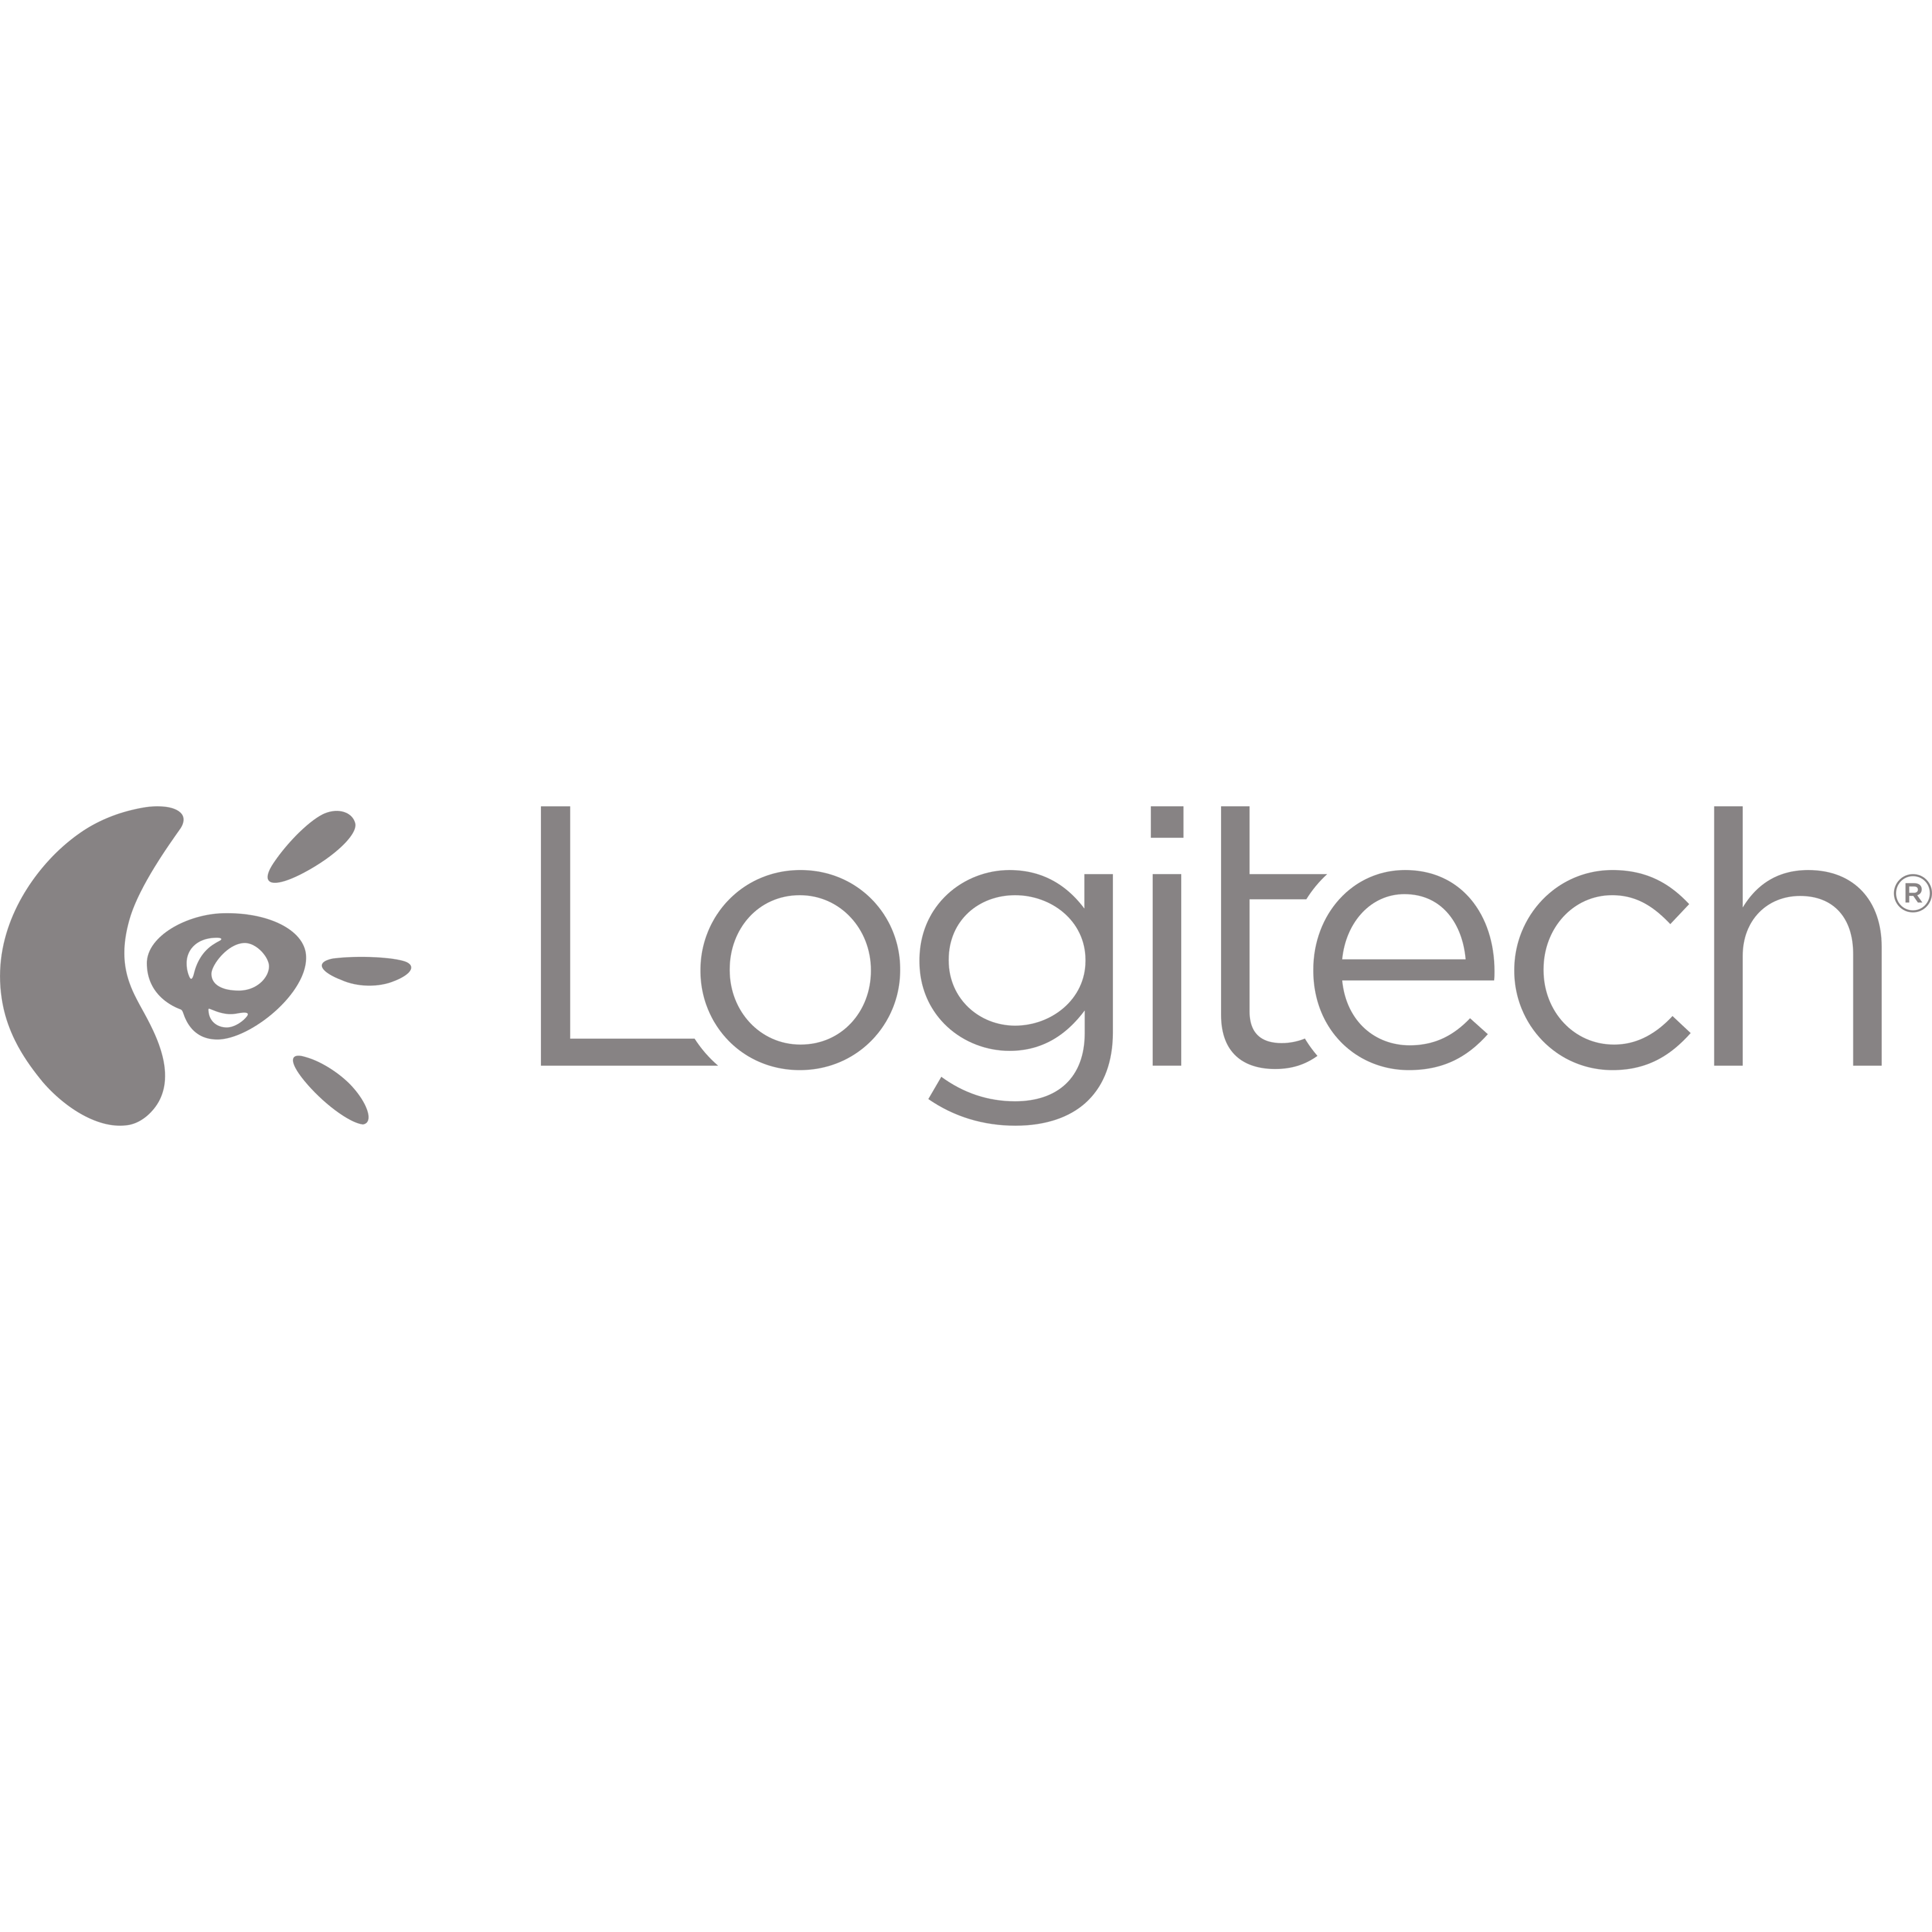 Logitech 2013 Logo Transparent Photo